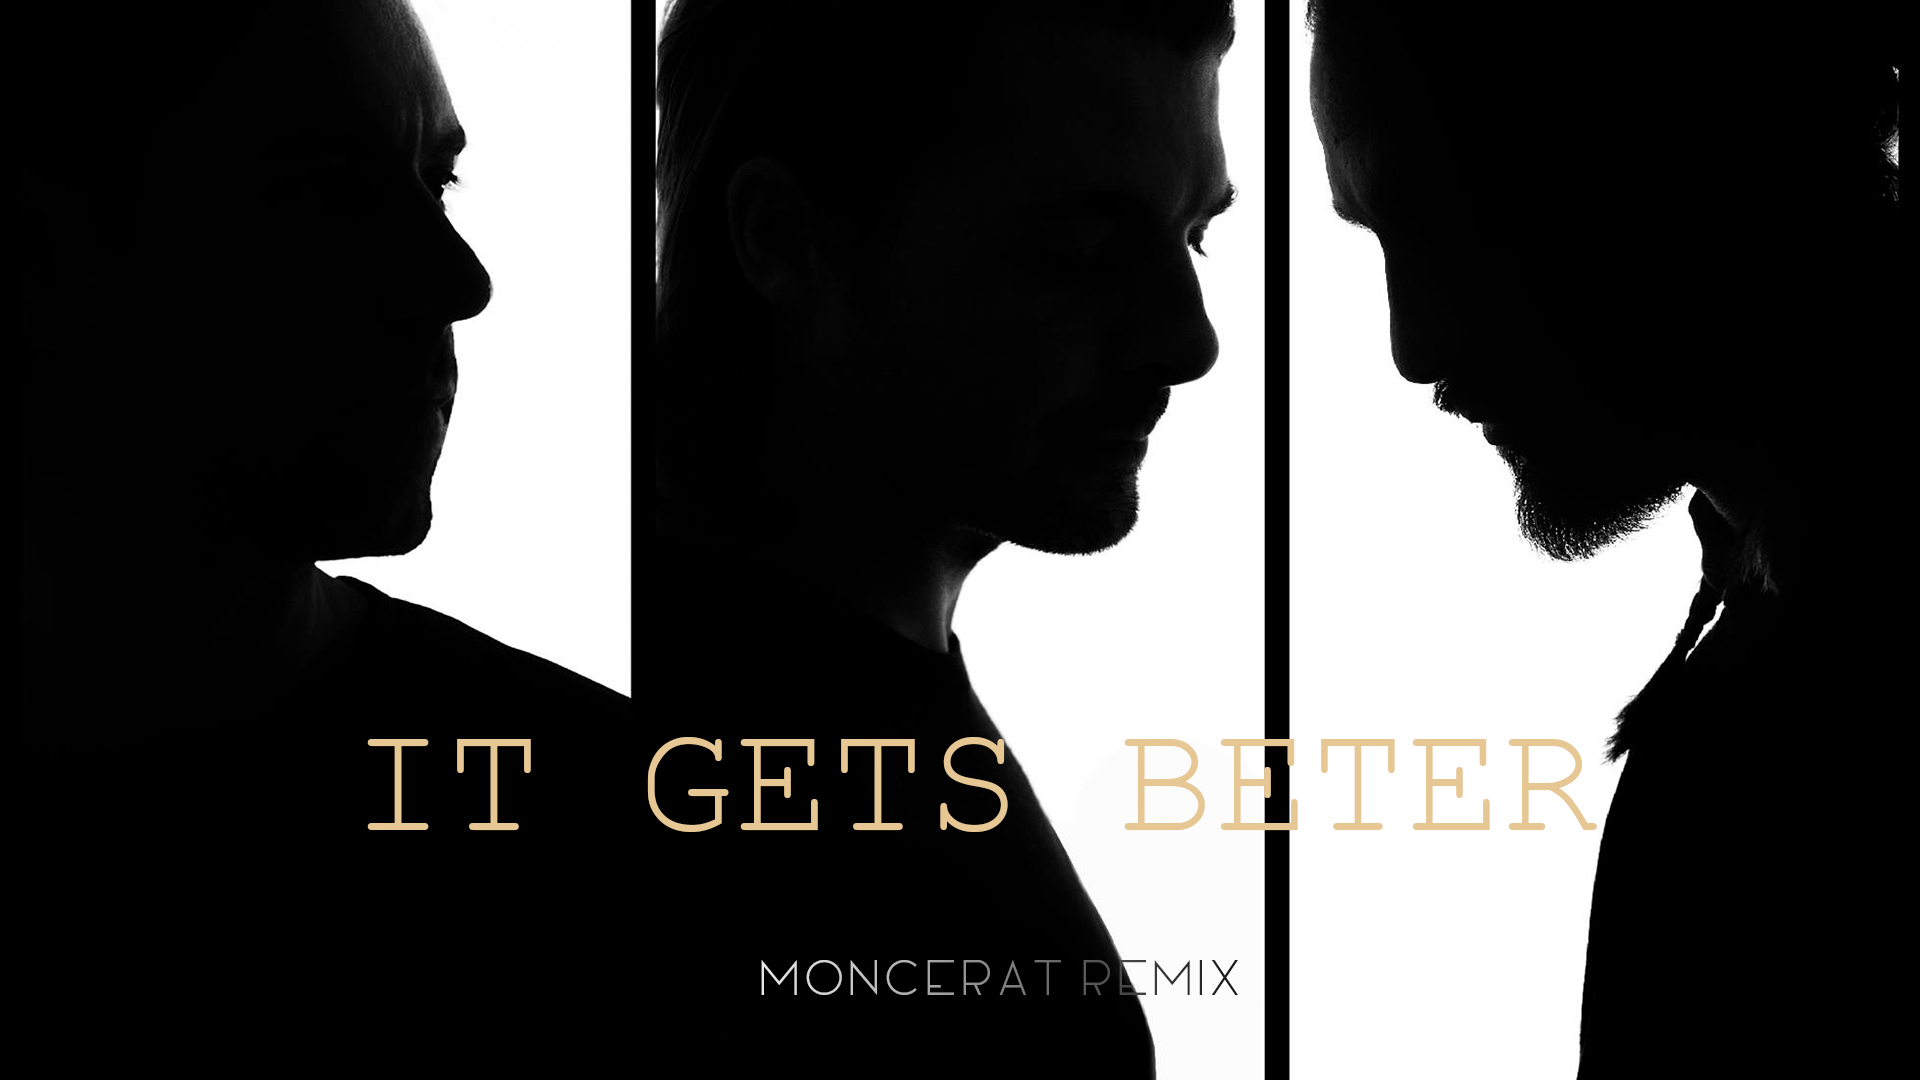 Swedish house Mafia - It Gets Better (MONCERAT REMIX)